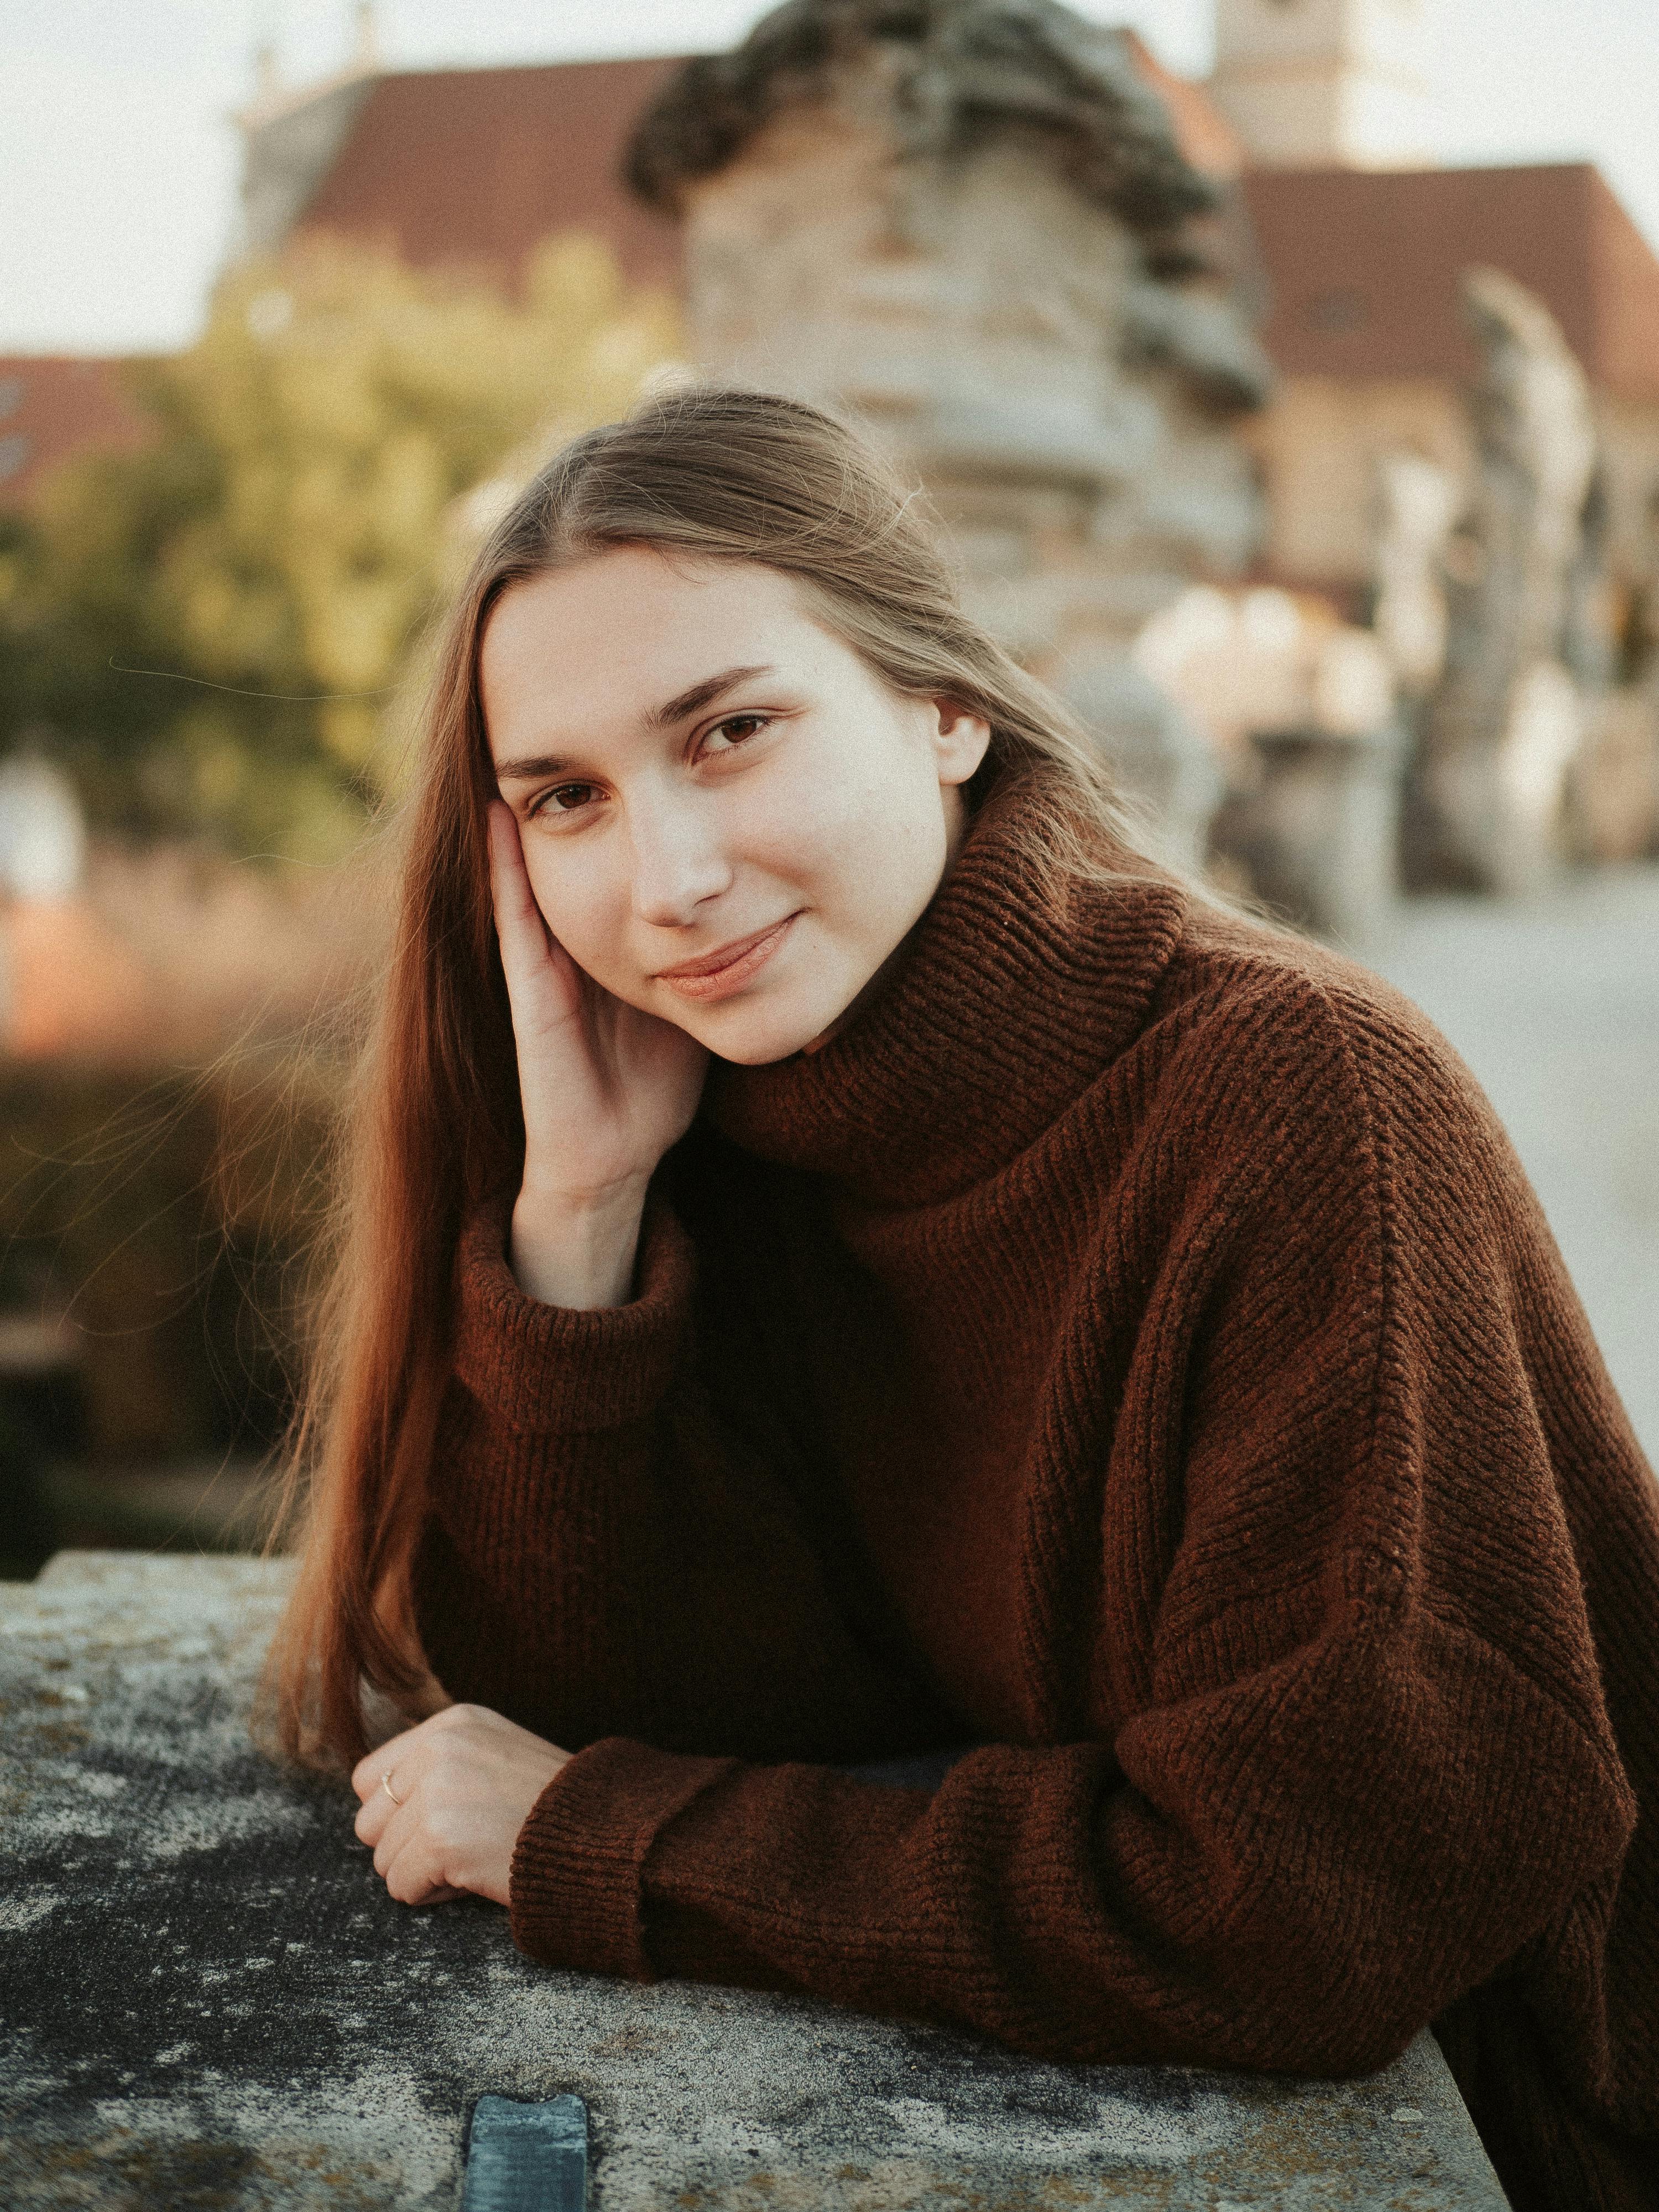 A smiling teenage girl | Source: Pexels